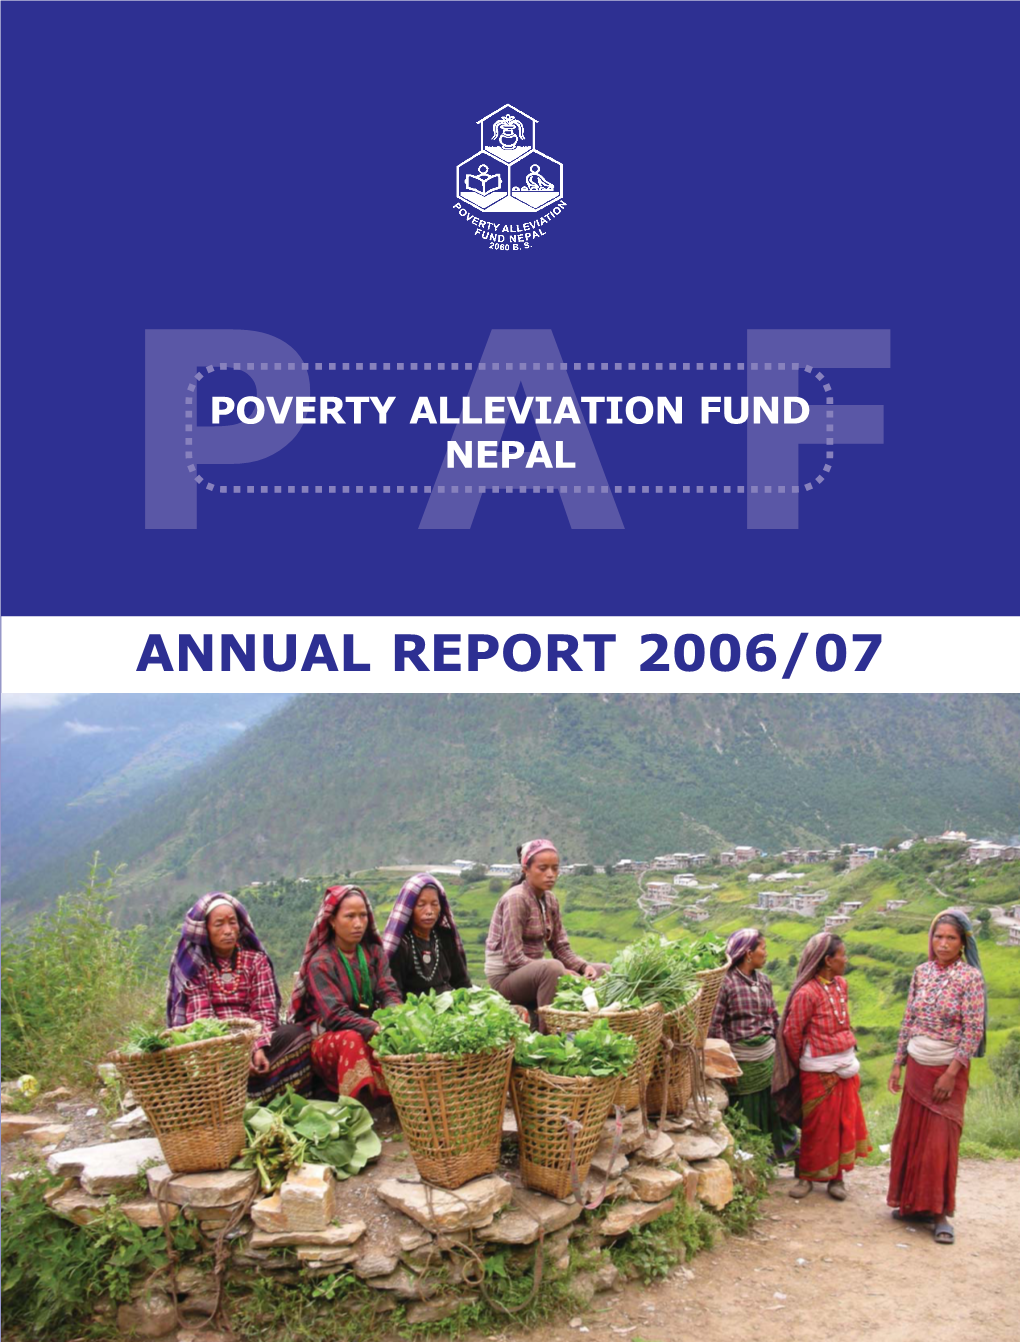 Annual Report 2006/07